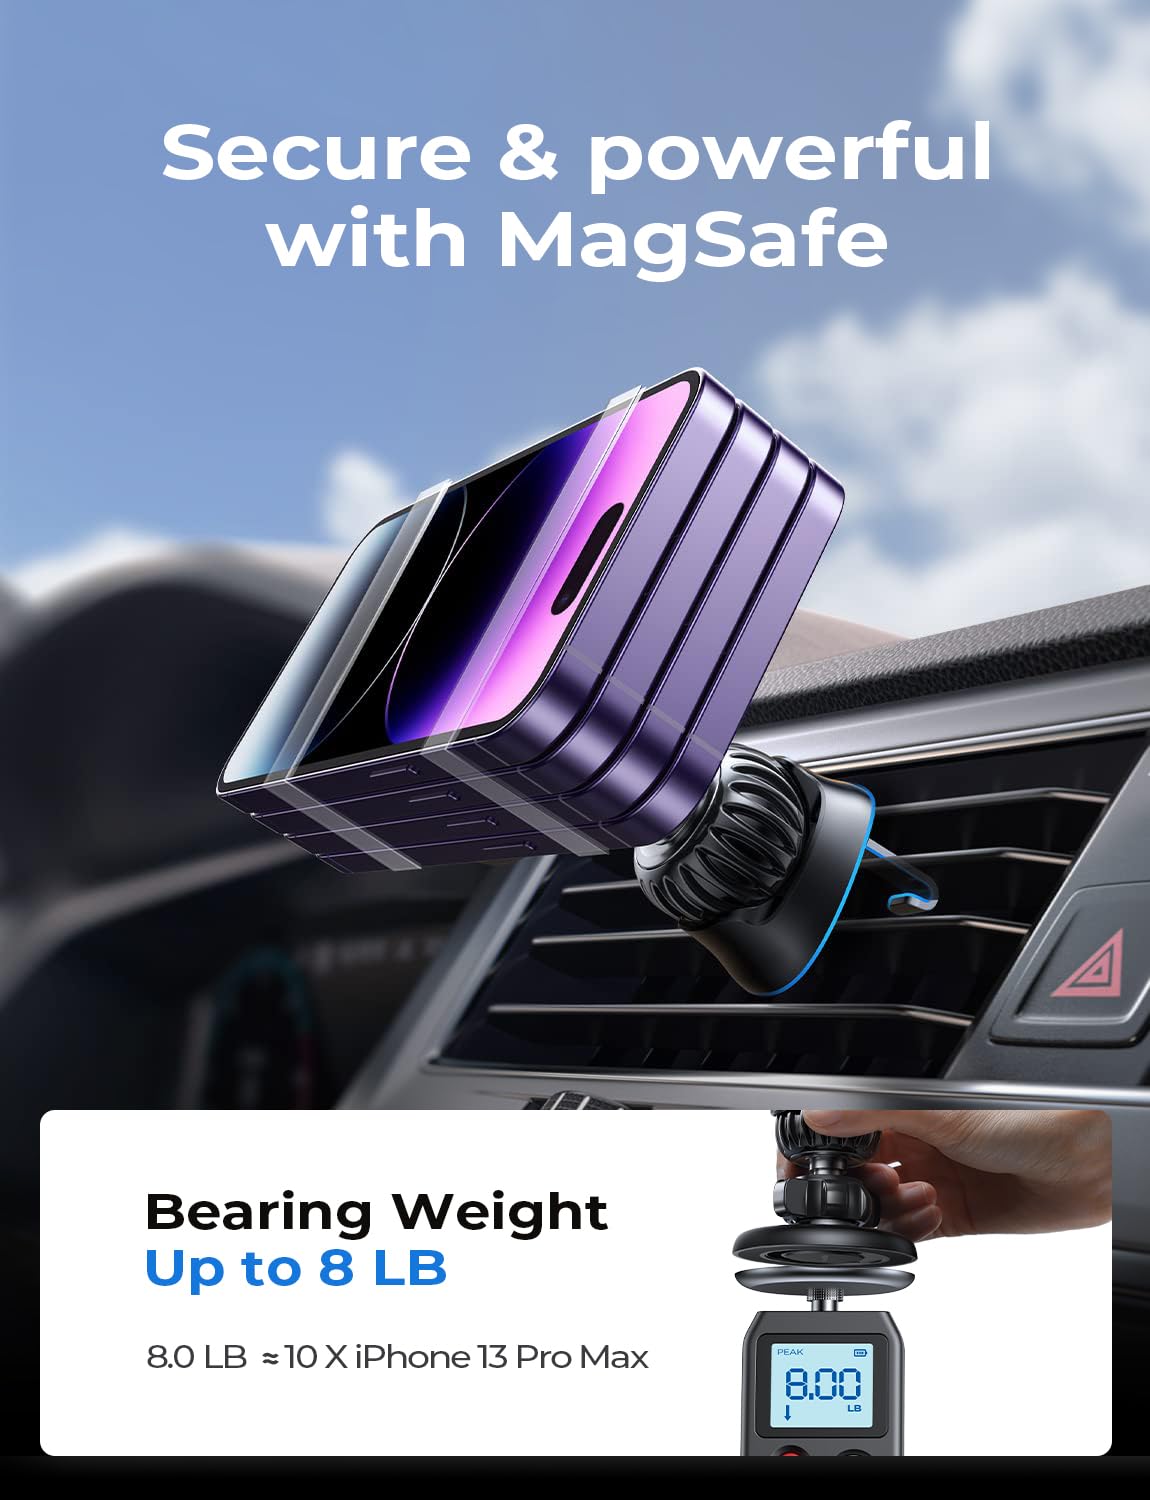 Compatible for MagSafe Car Mount LISEN iPhone Car Mount